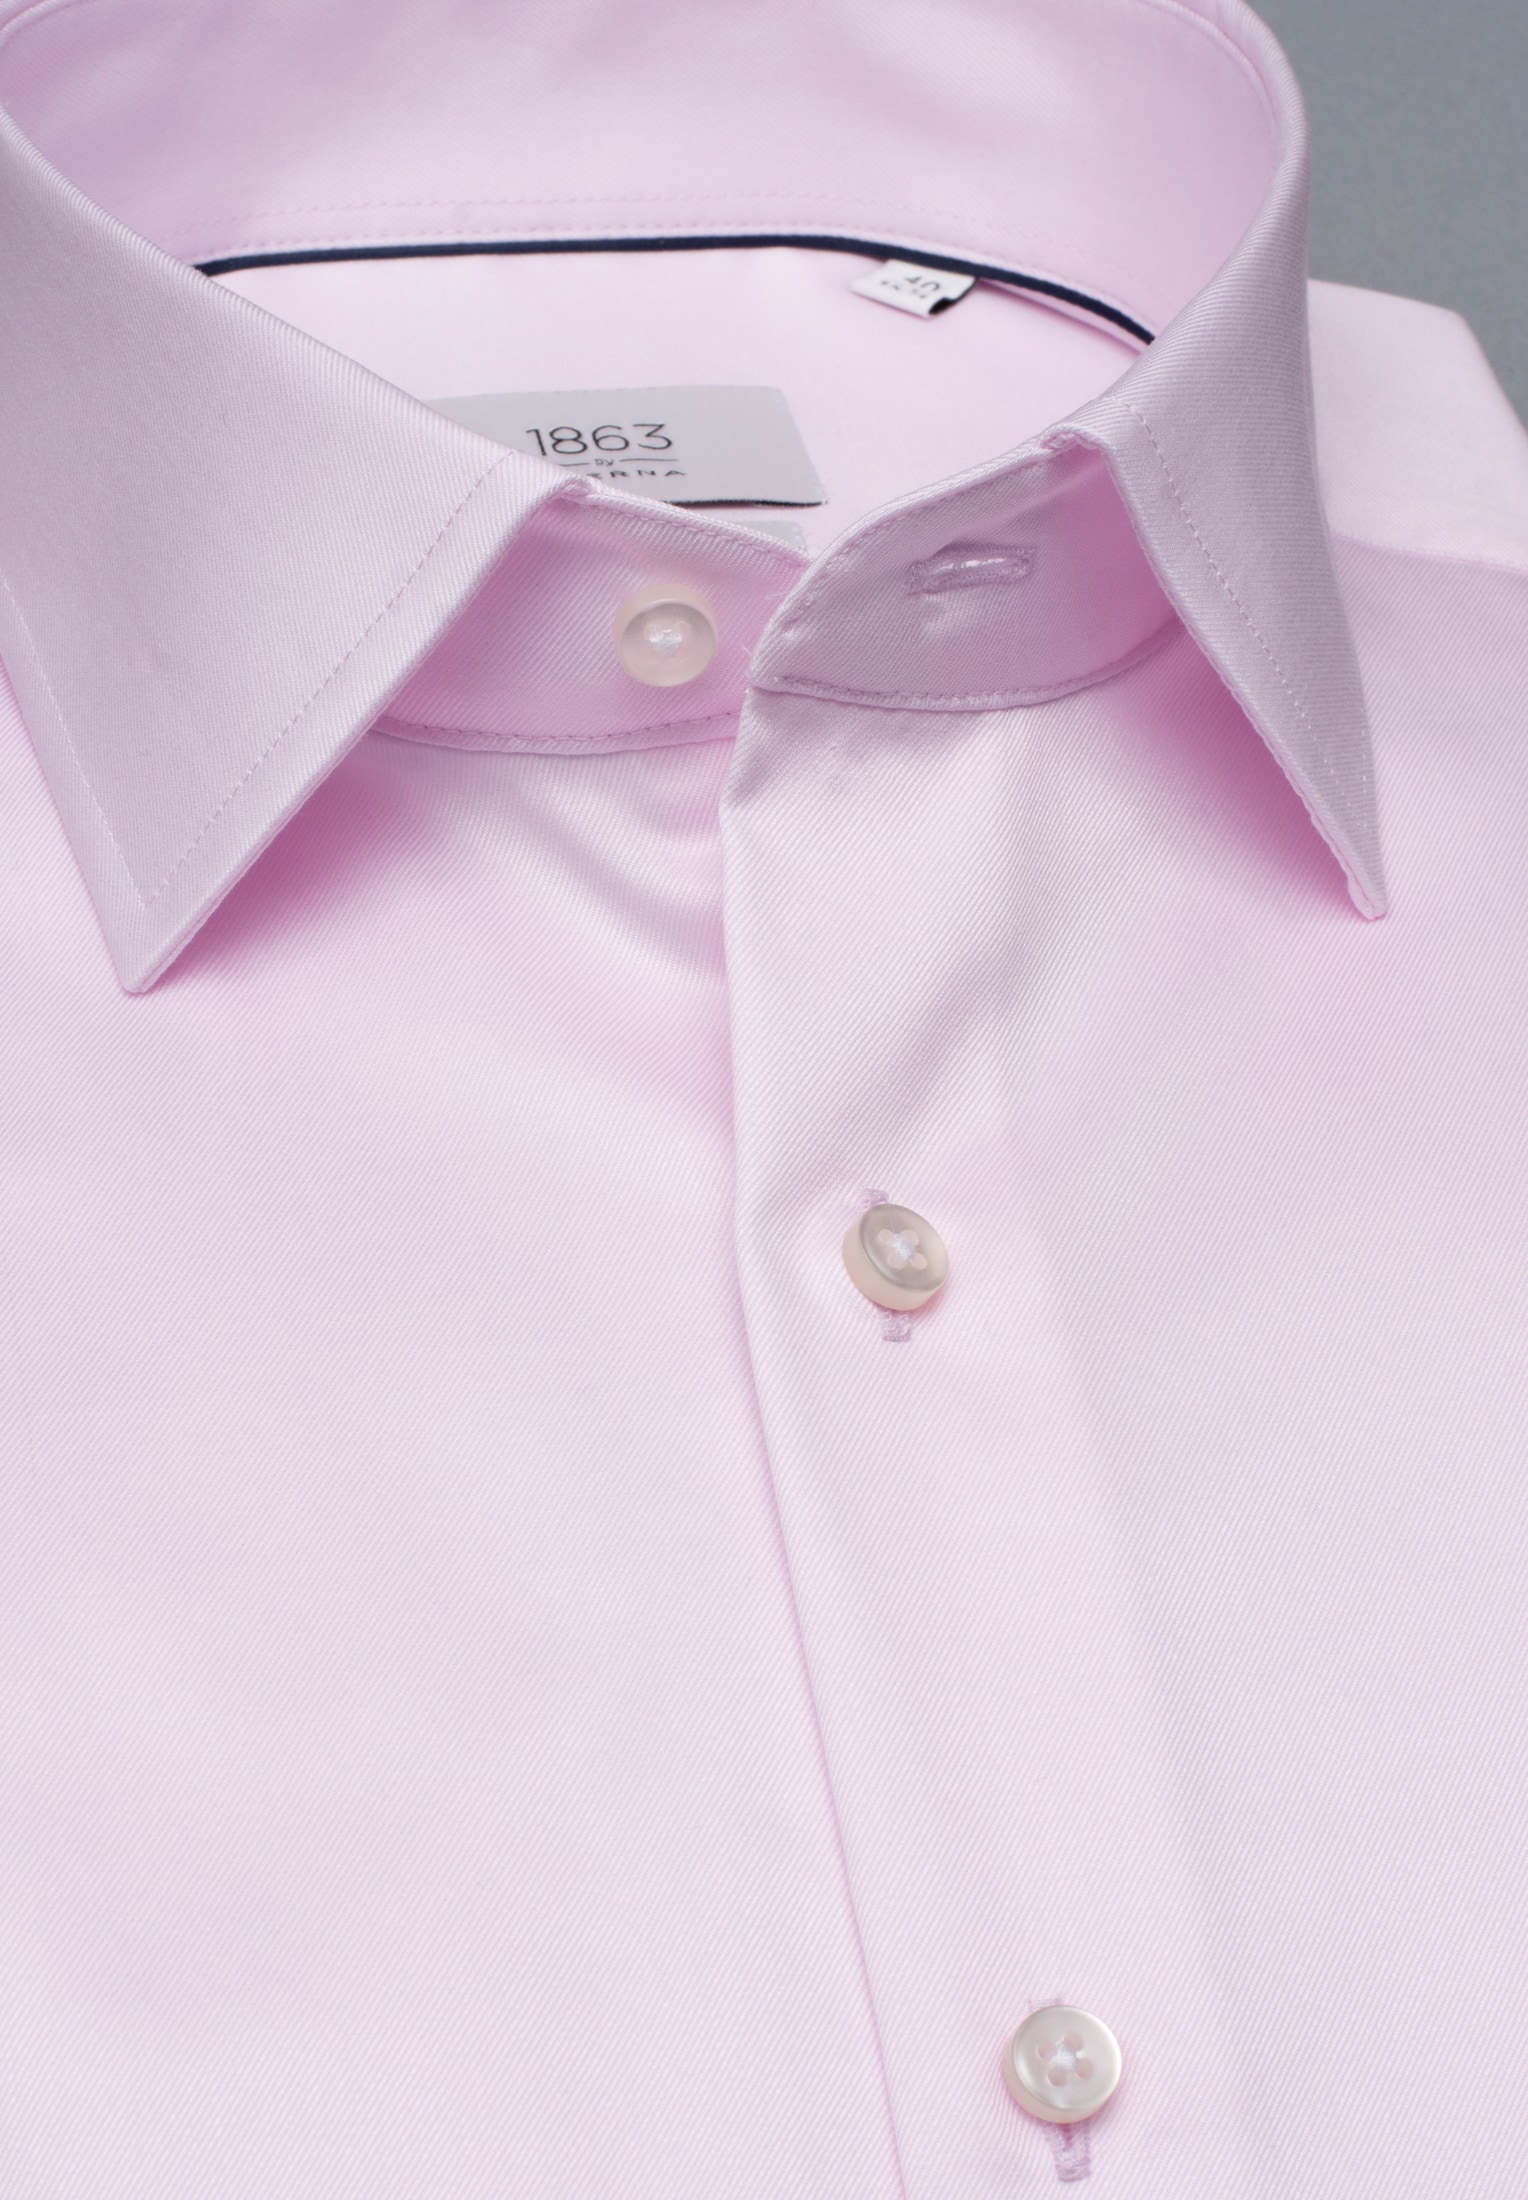 COMFORT FIT Shirt rubinrot rubinrot | 43 unifarben in Langarm Luxury 1SH00739-05-51-43-1/1 | | 